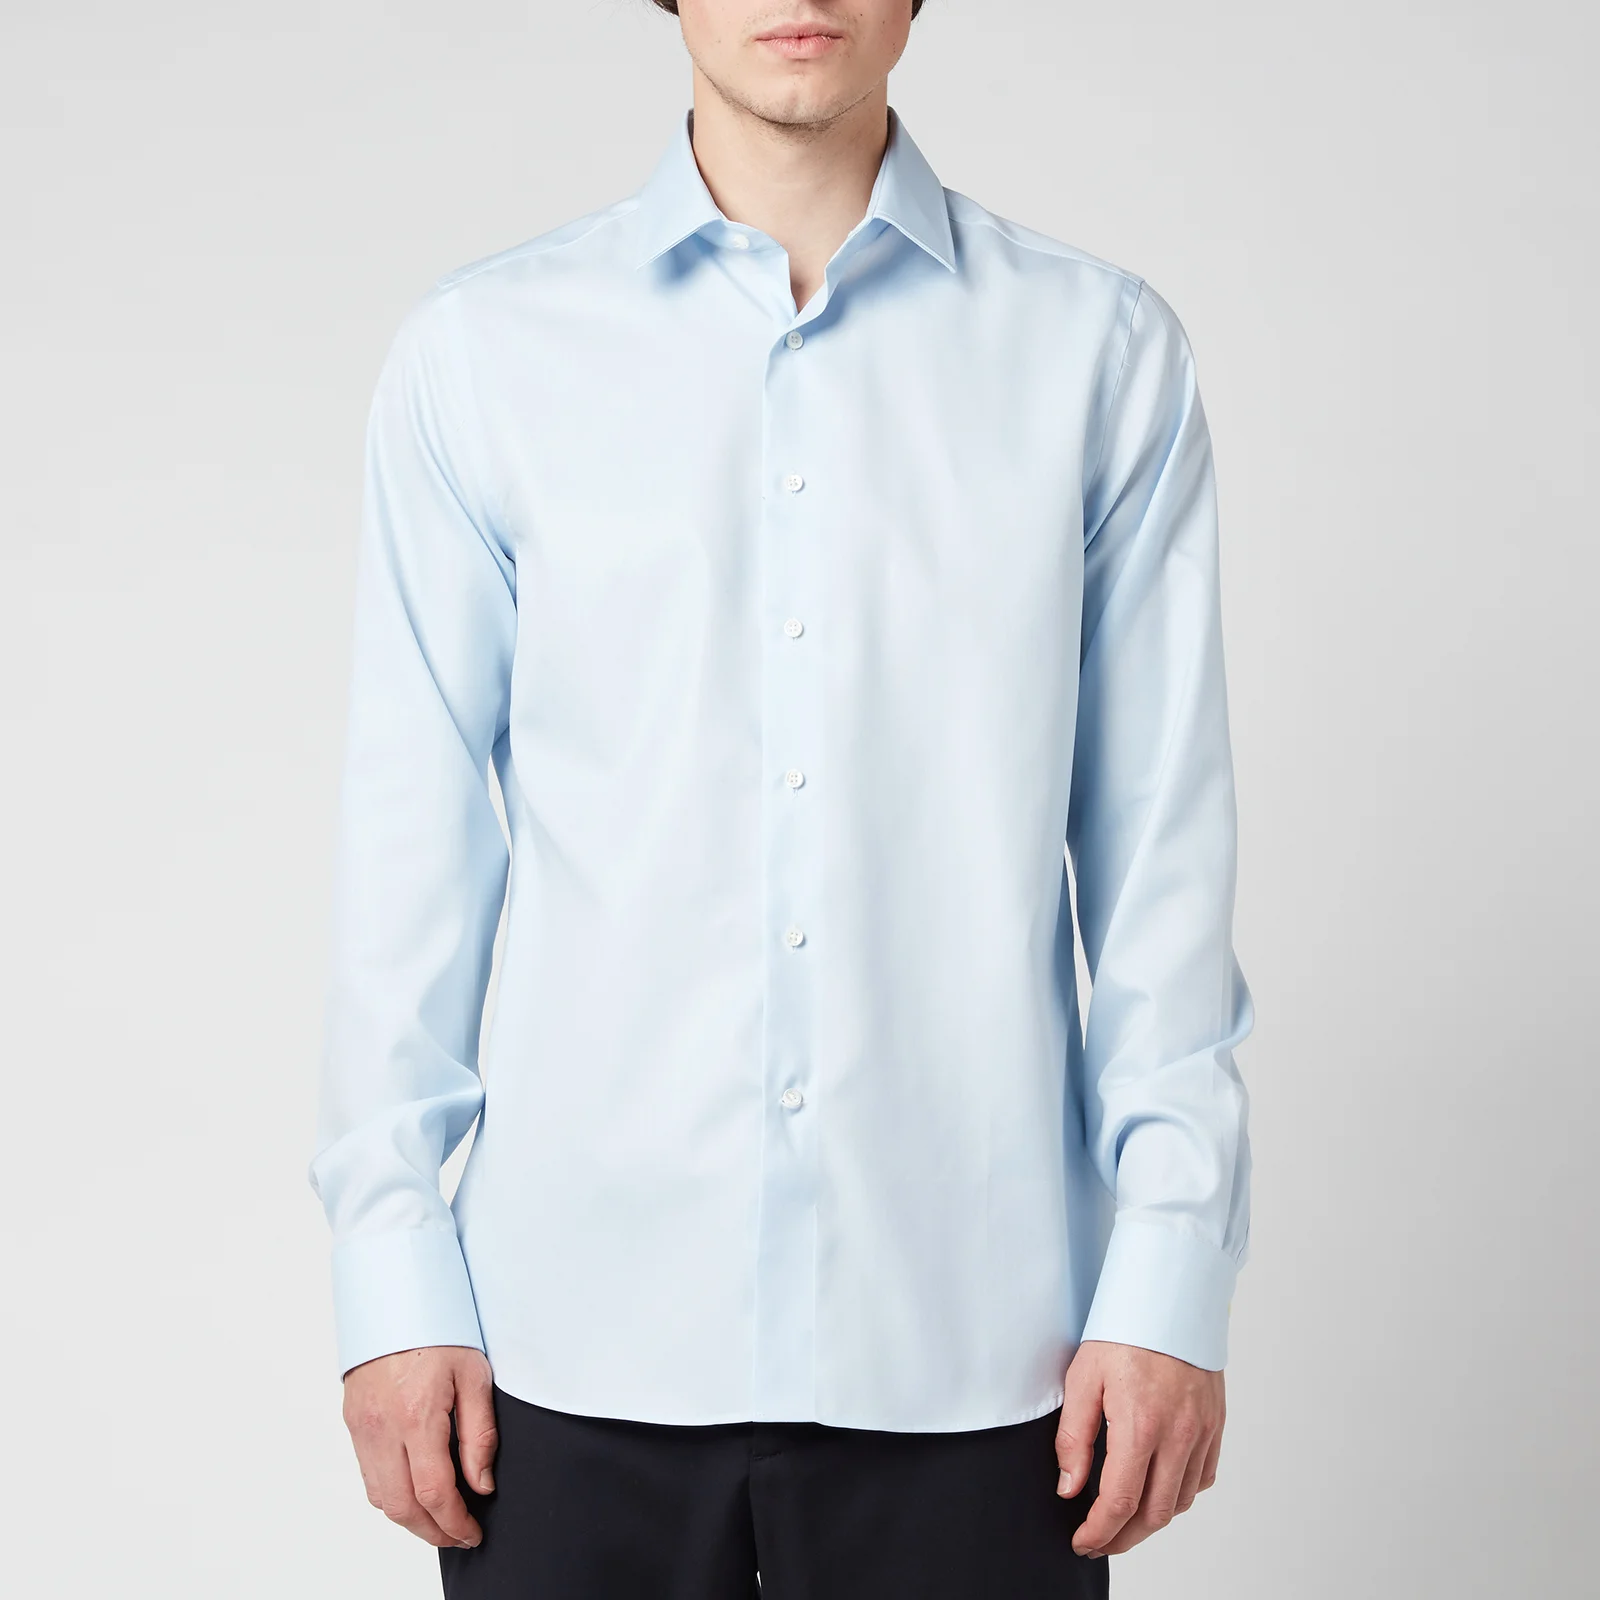 Canali Men's Point Collar Cotton Twill Slim Fit Shirt - Light Blue Image 1